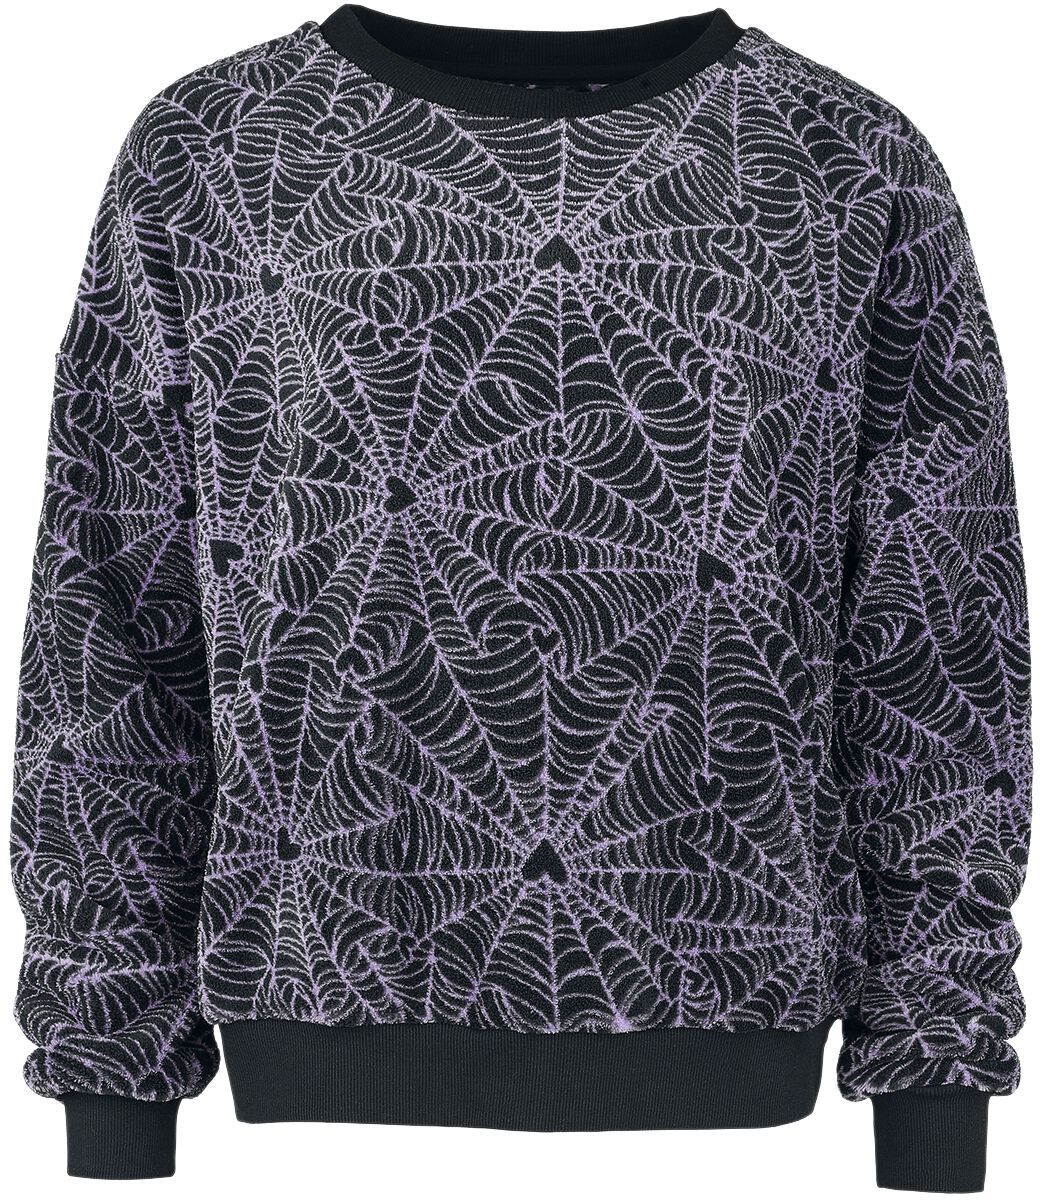 Full Volume by EMP Spider-web jumper Sweatshirt black